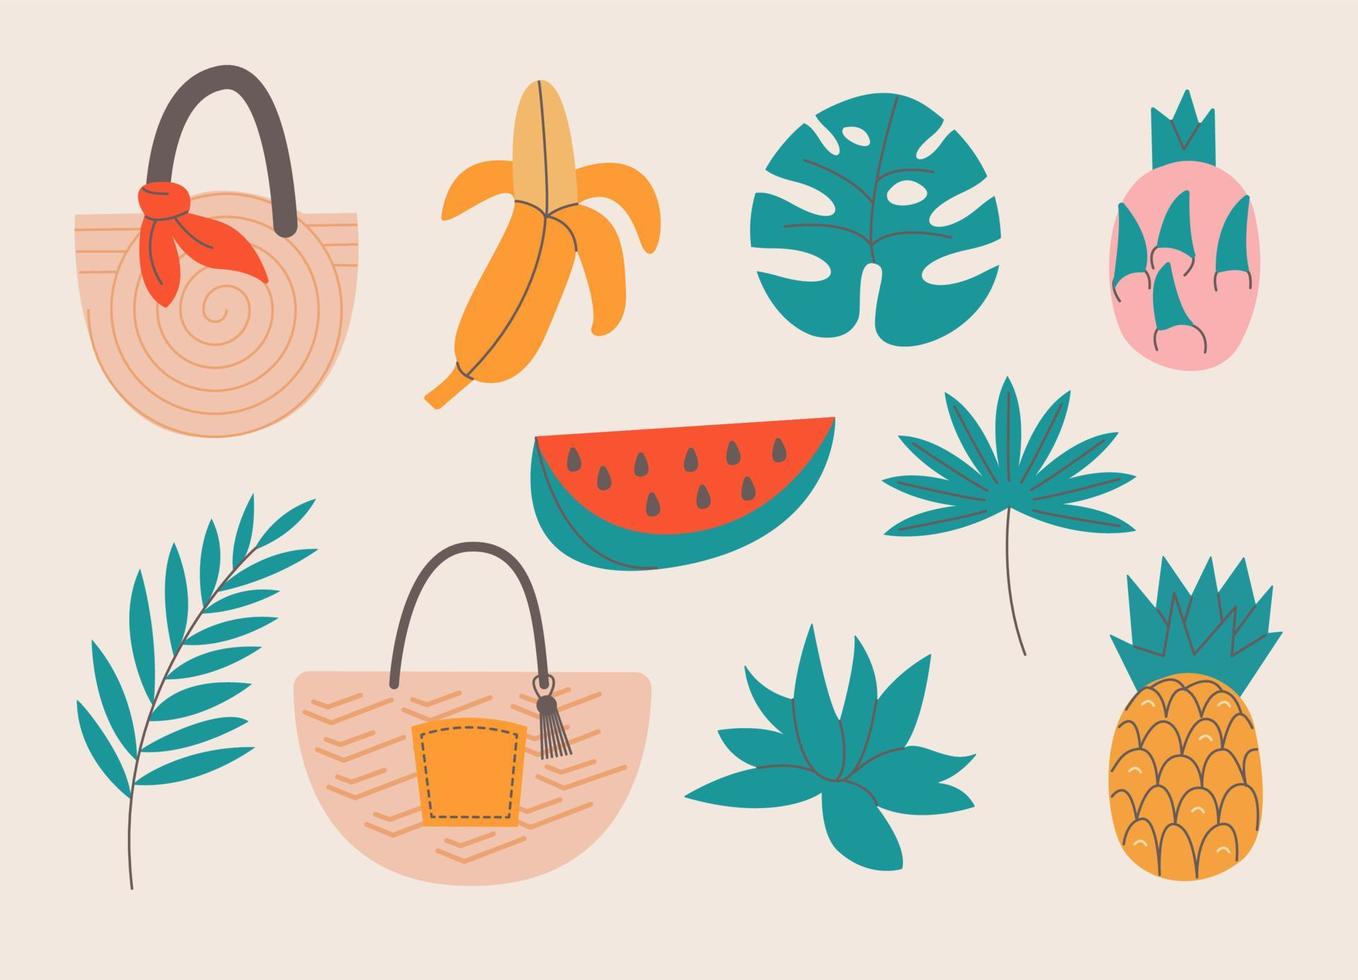 karton zomer elementen, reis, strand, zomertijd accessoire. palm bladeren. strand Tassen en exotisch fruit vector illustratie set. tekening karton illustratie.